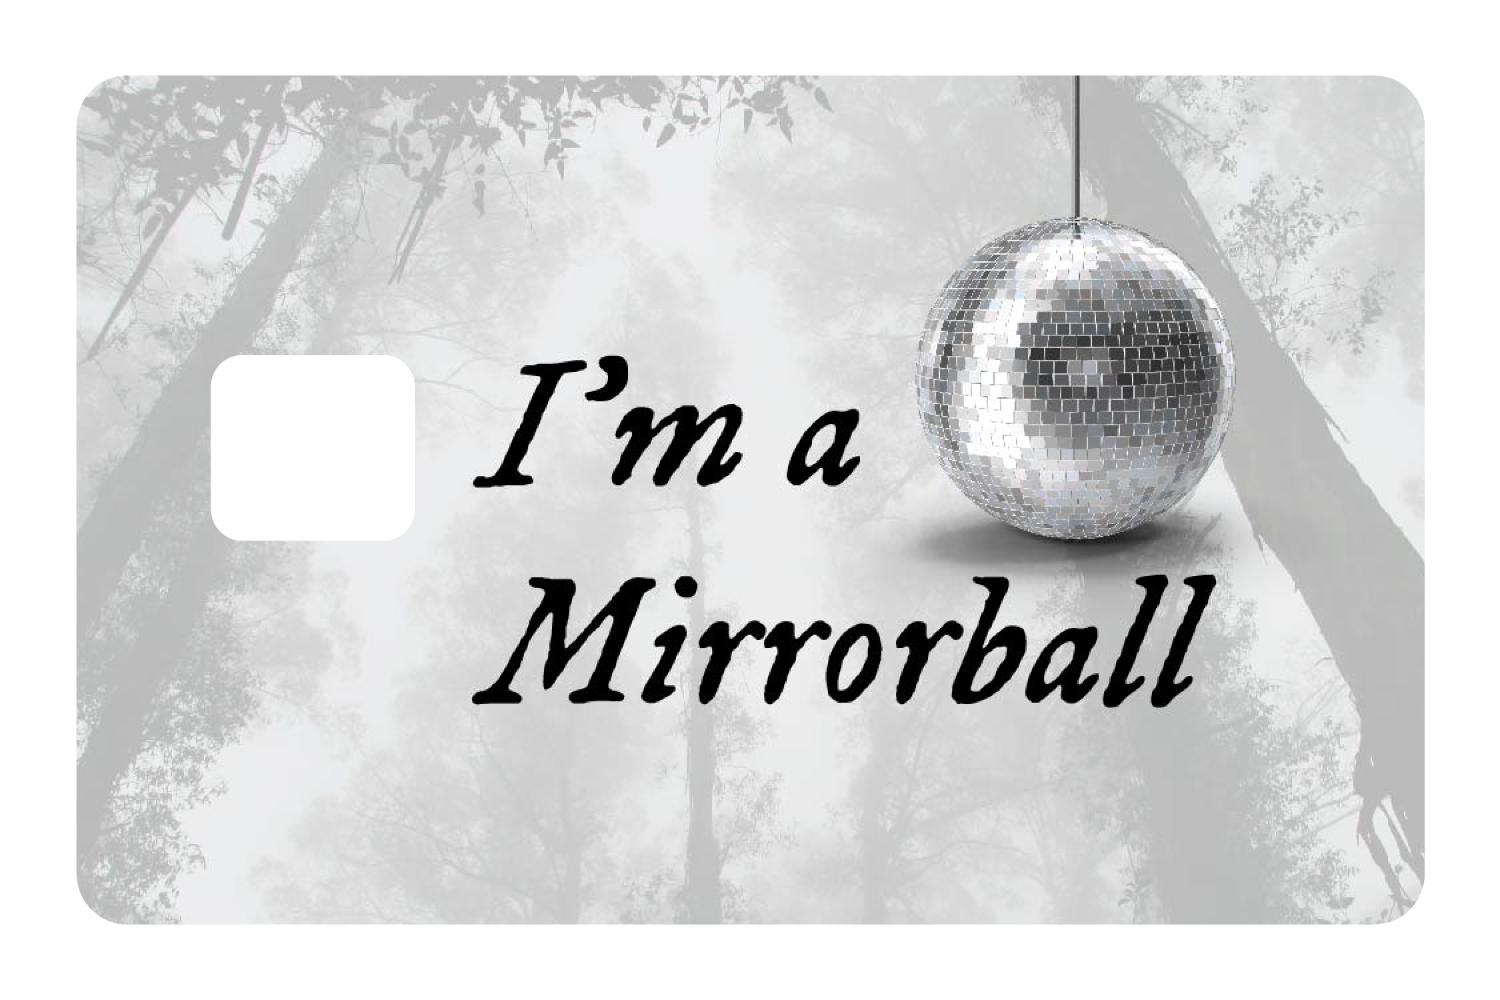 Mirrorball